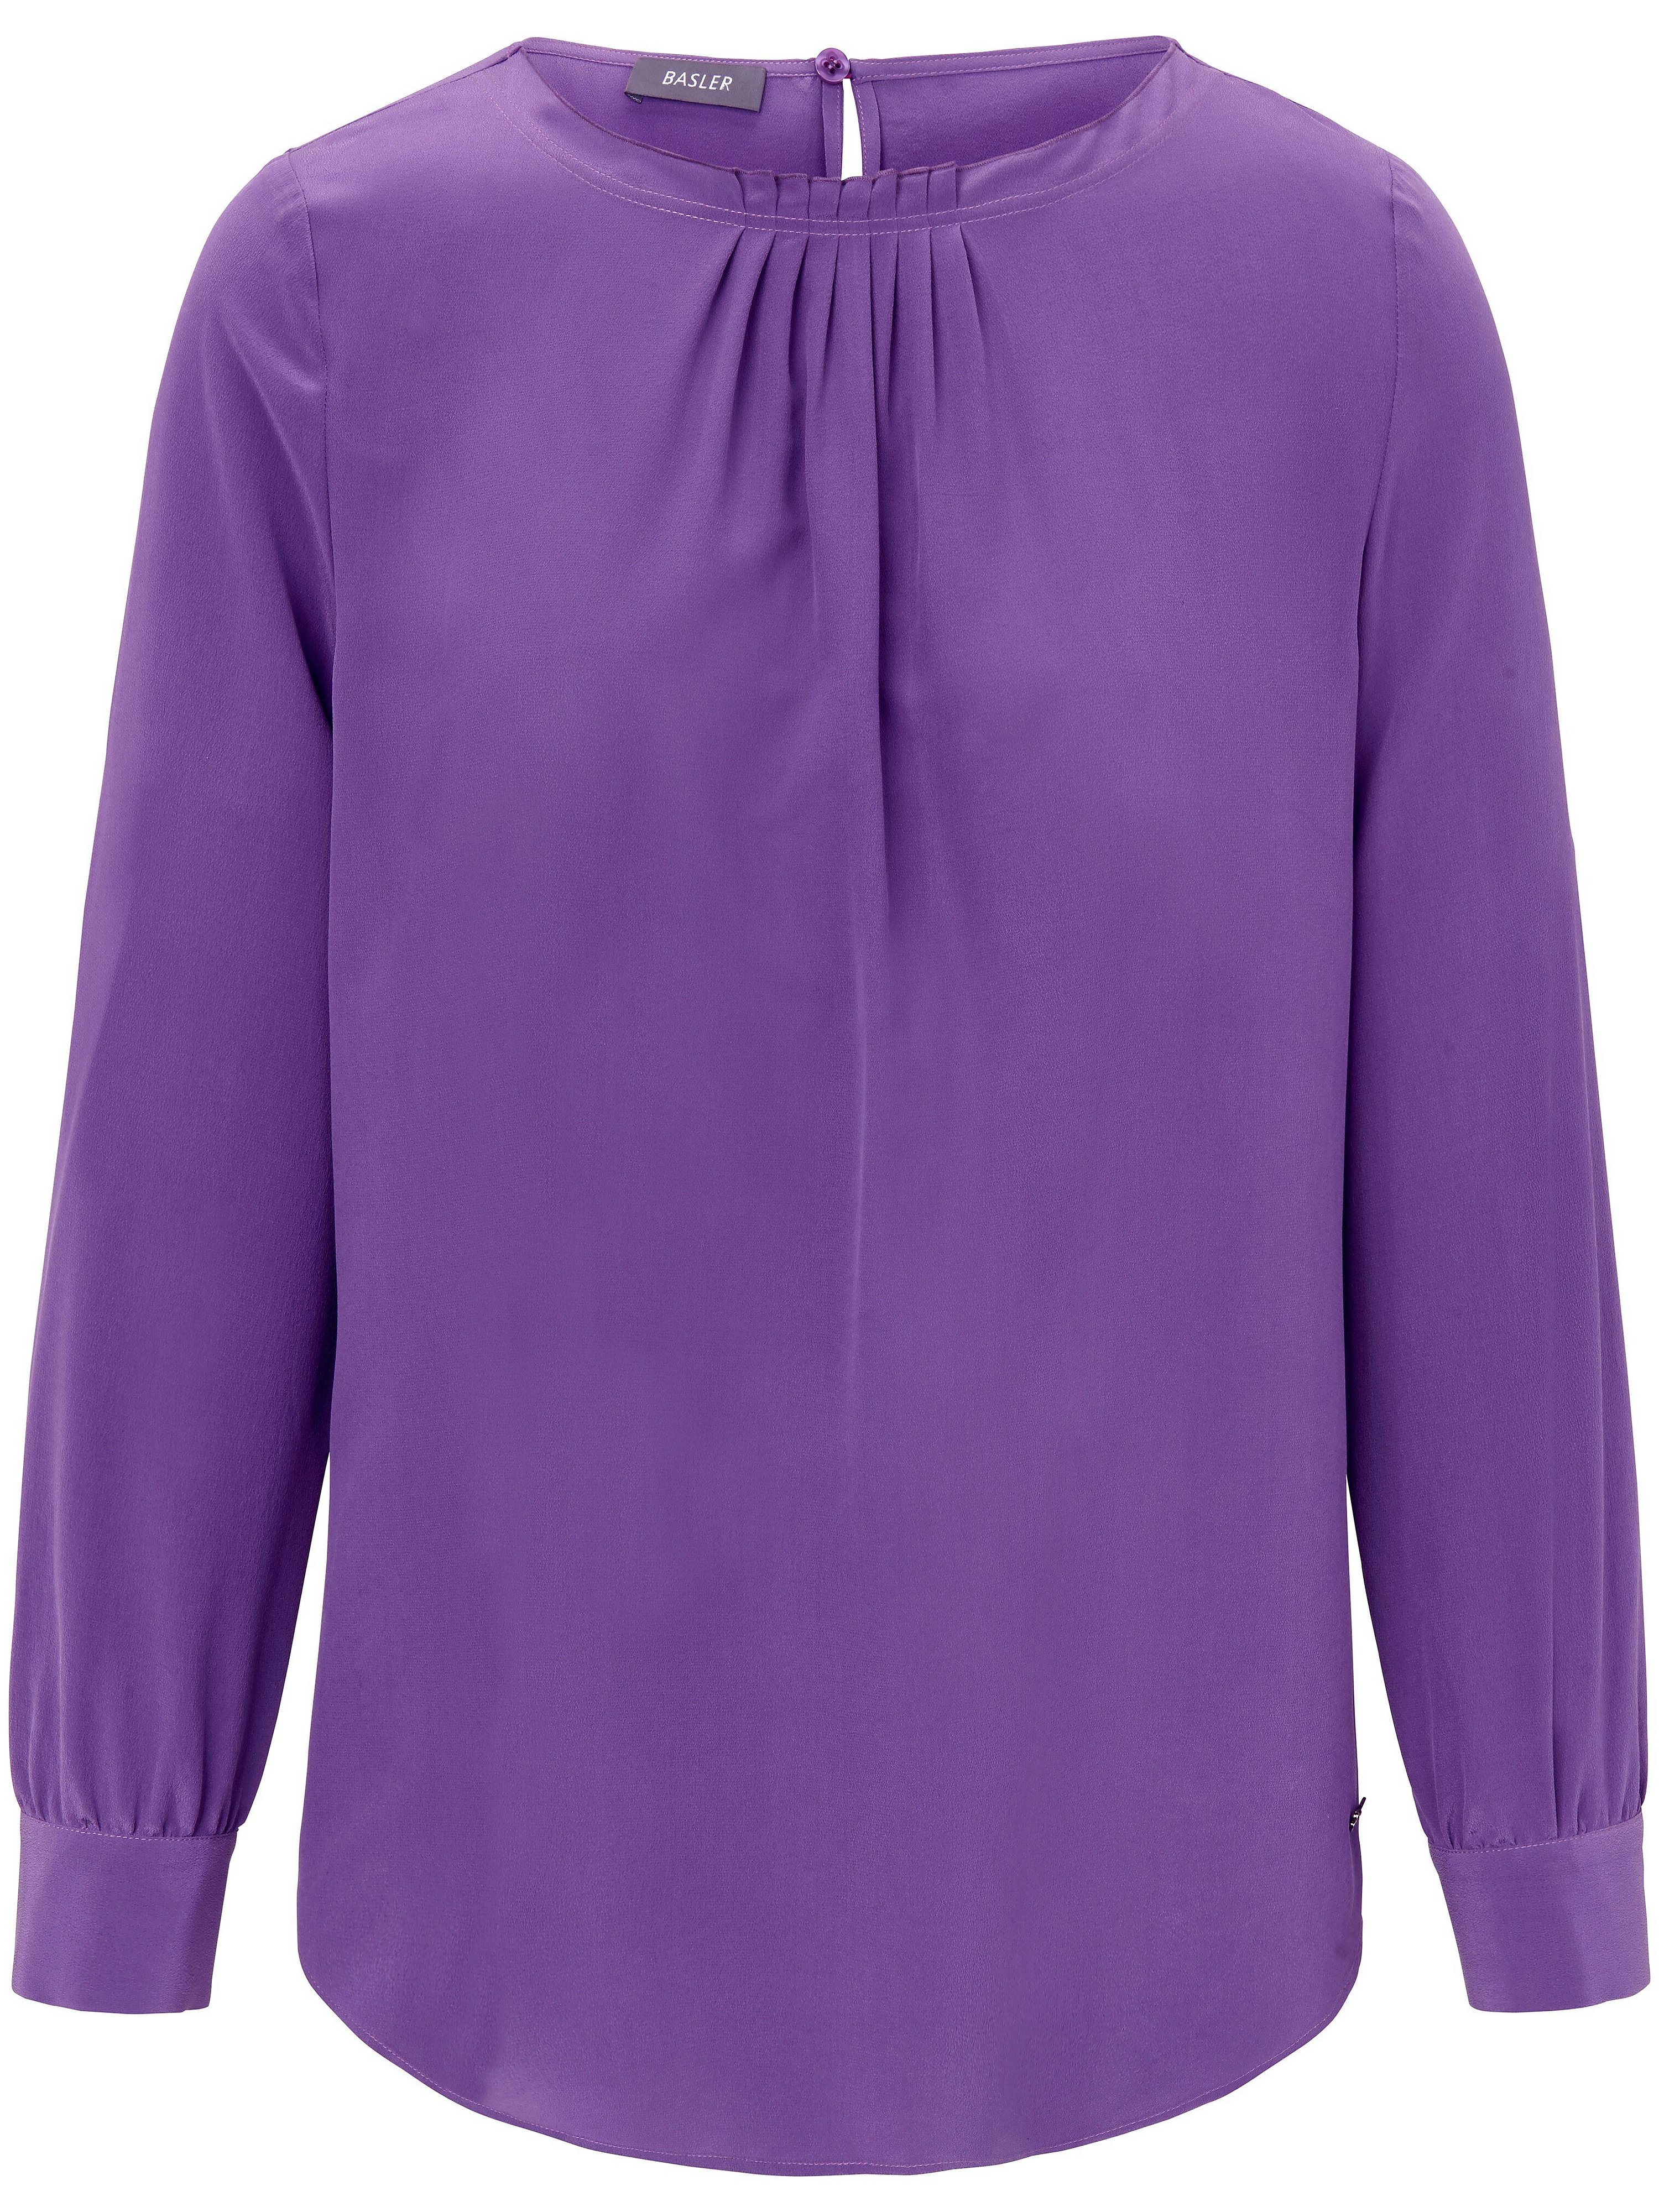 La blouse 100% soie  Basler violet taille 40